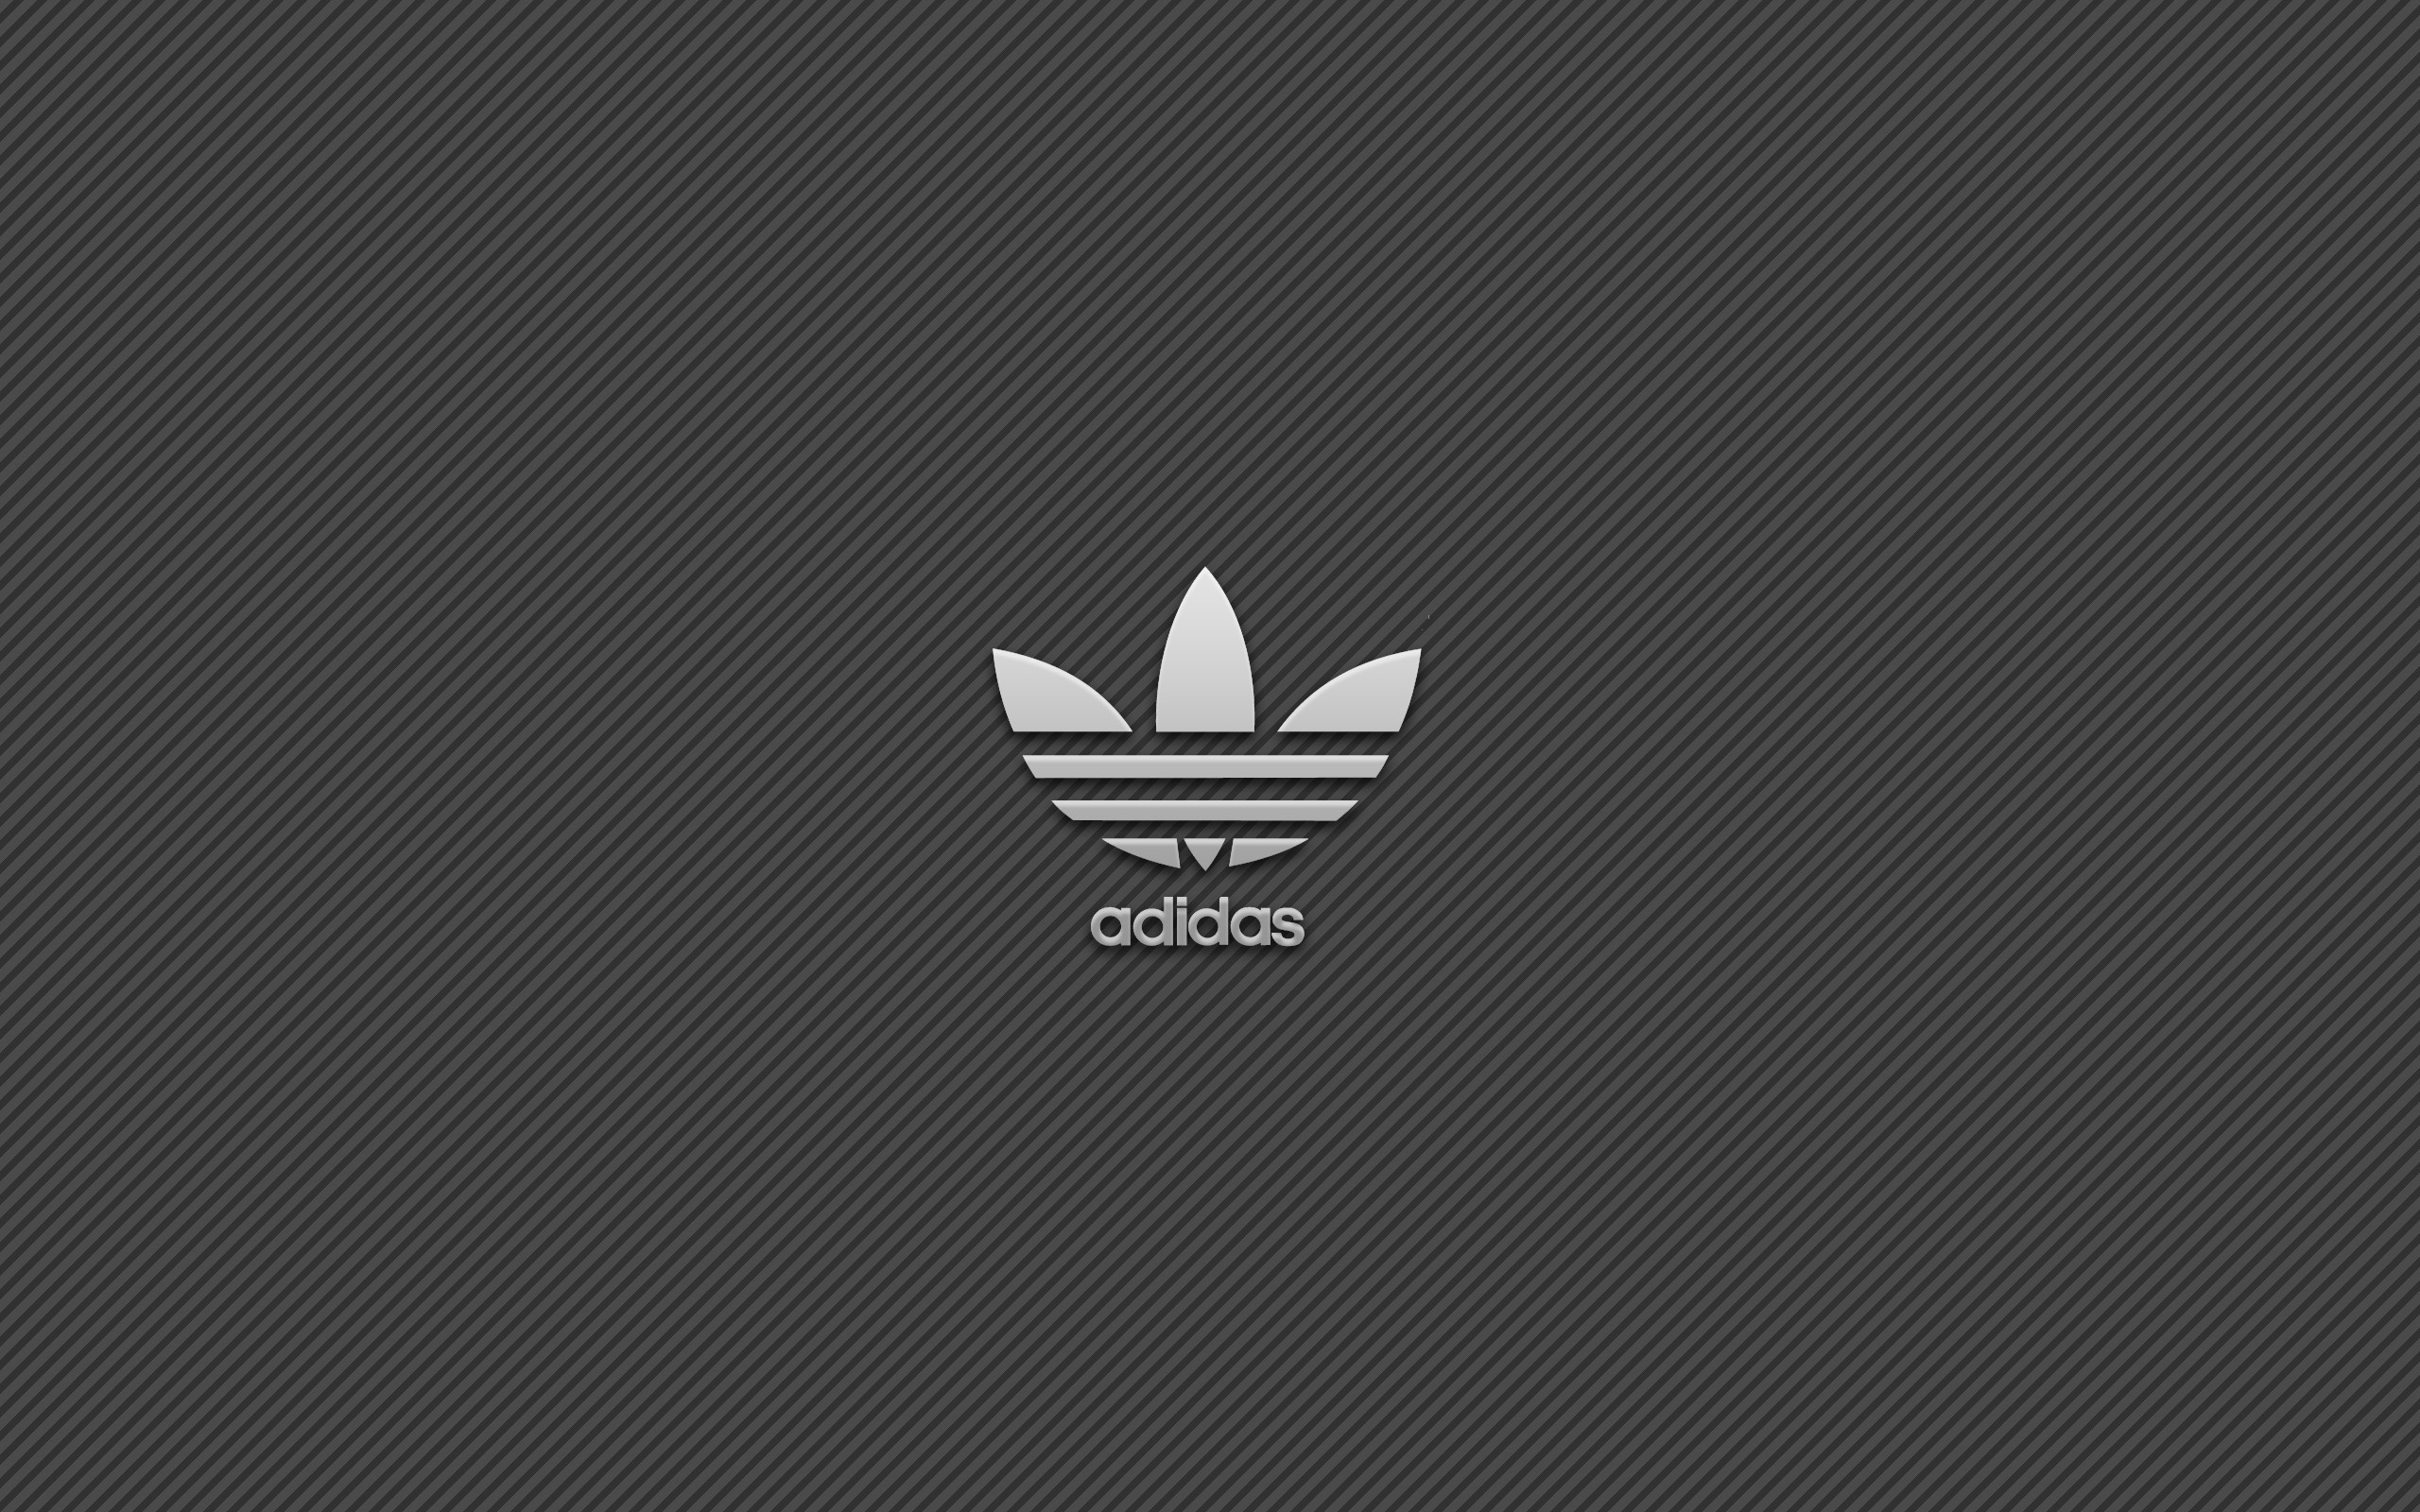 Adidas Simple Logo Background